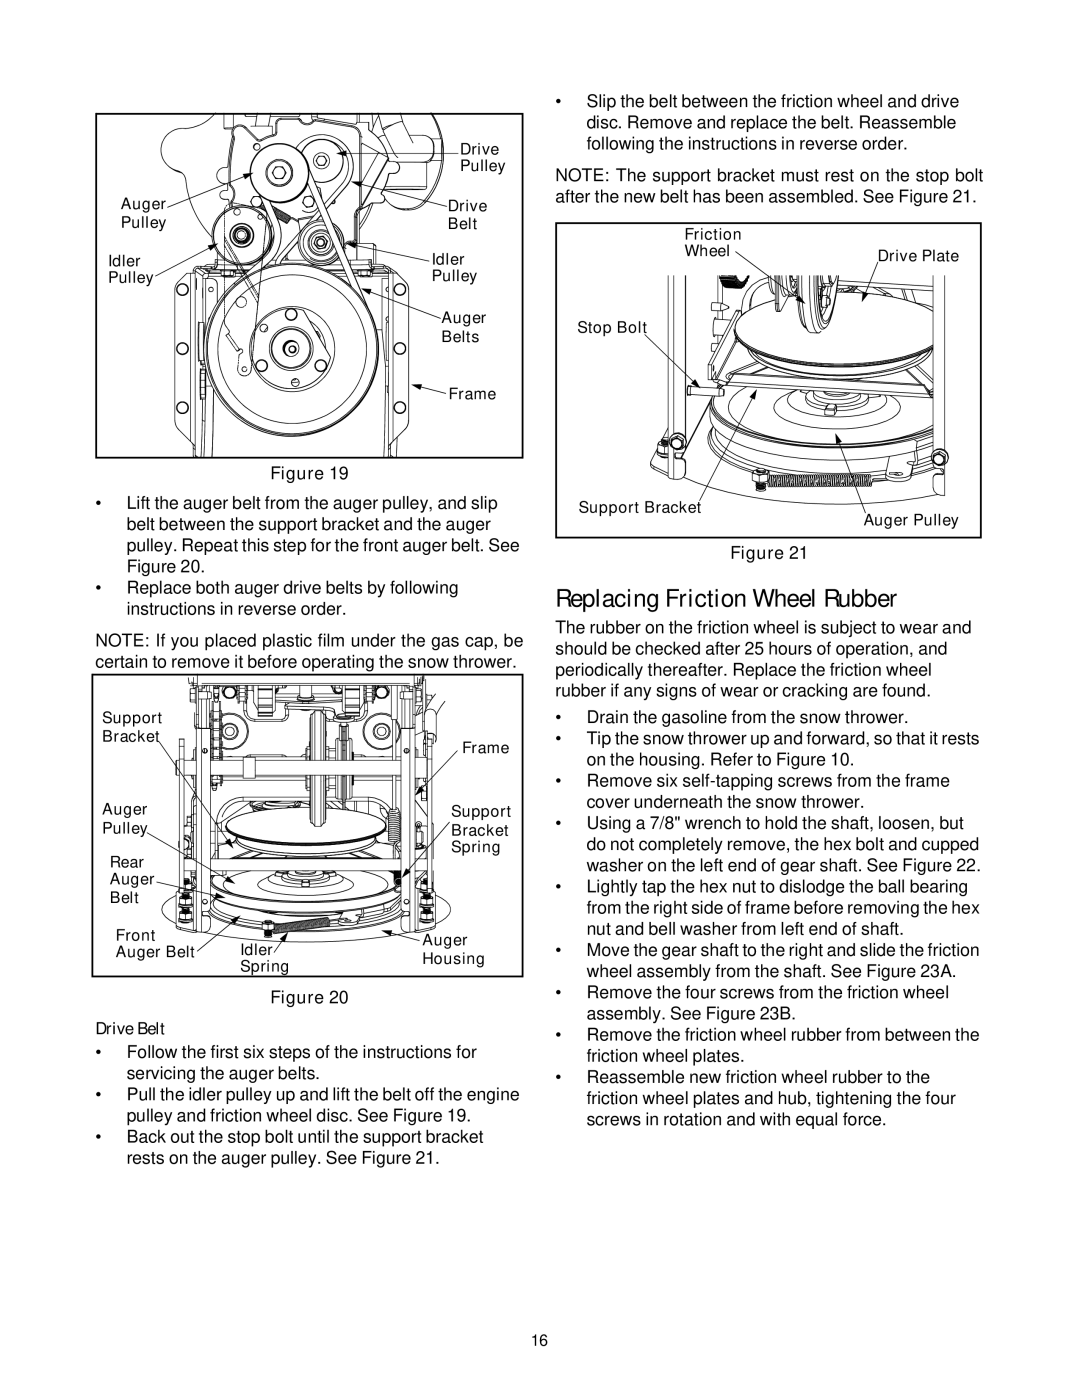 Troy-Bilt 772C0767 manual Replacing Friction Wheel Rubber, Drive Belt 